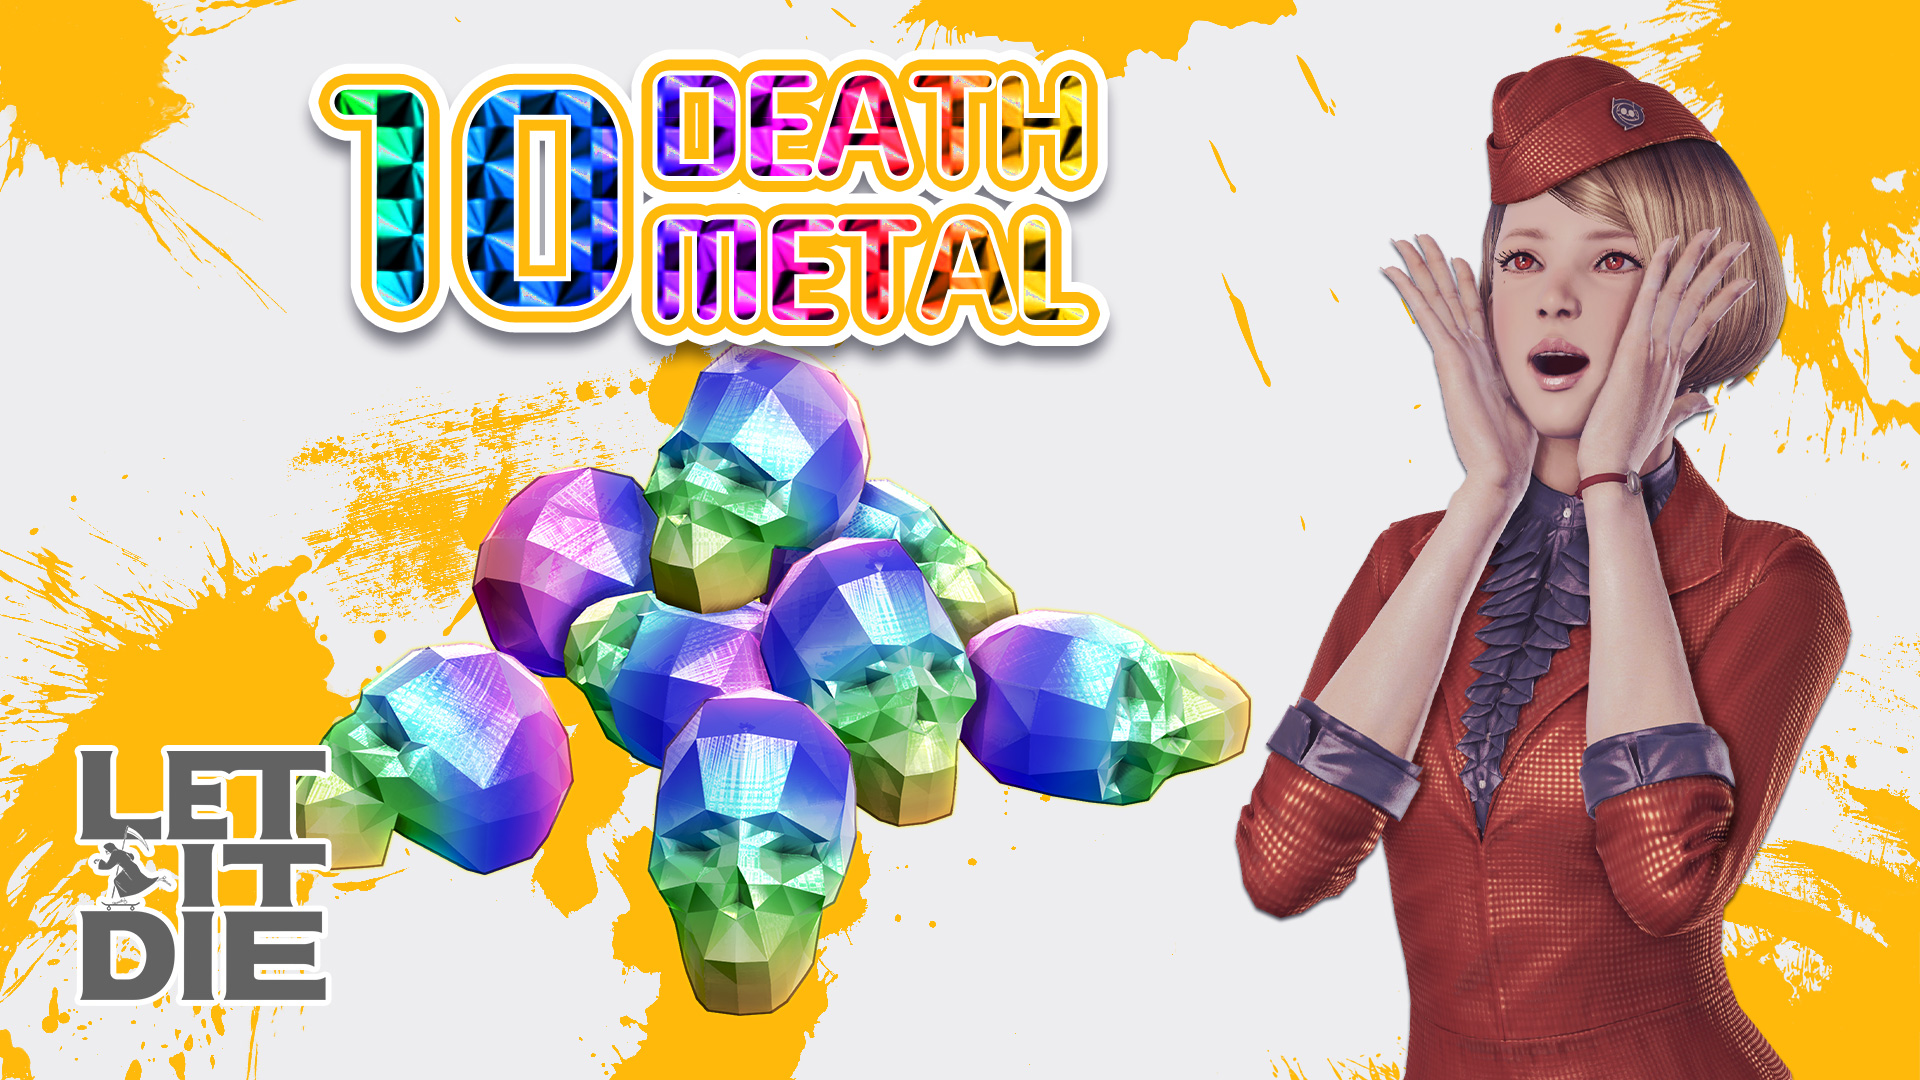 LET IT DIE -(Special)10 Death Metals- 001 Featured Screenshot #1